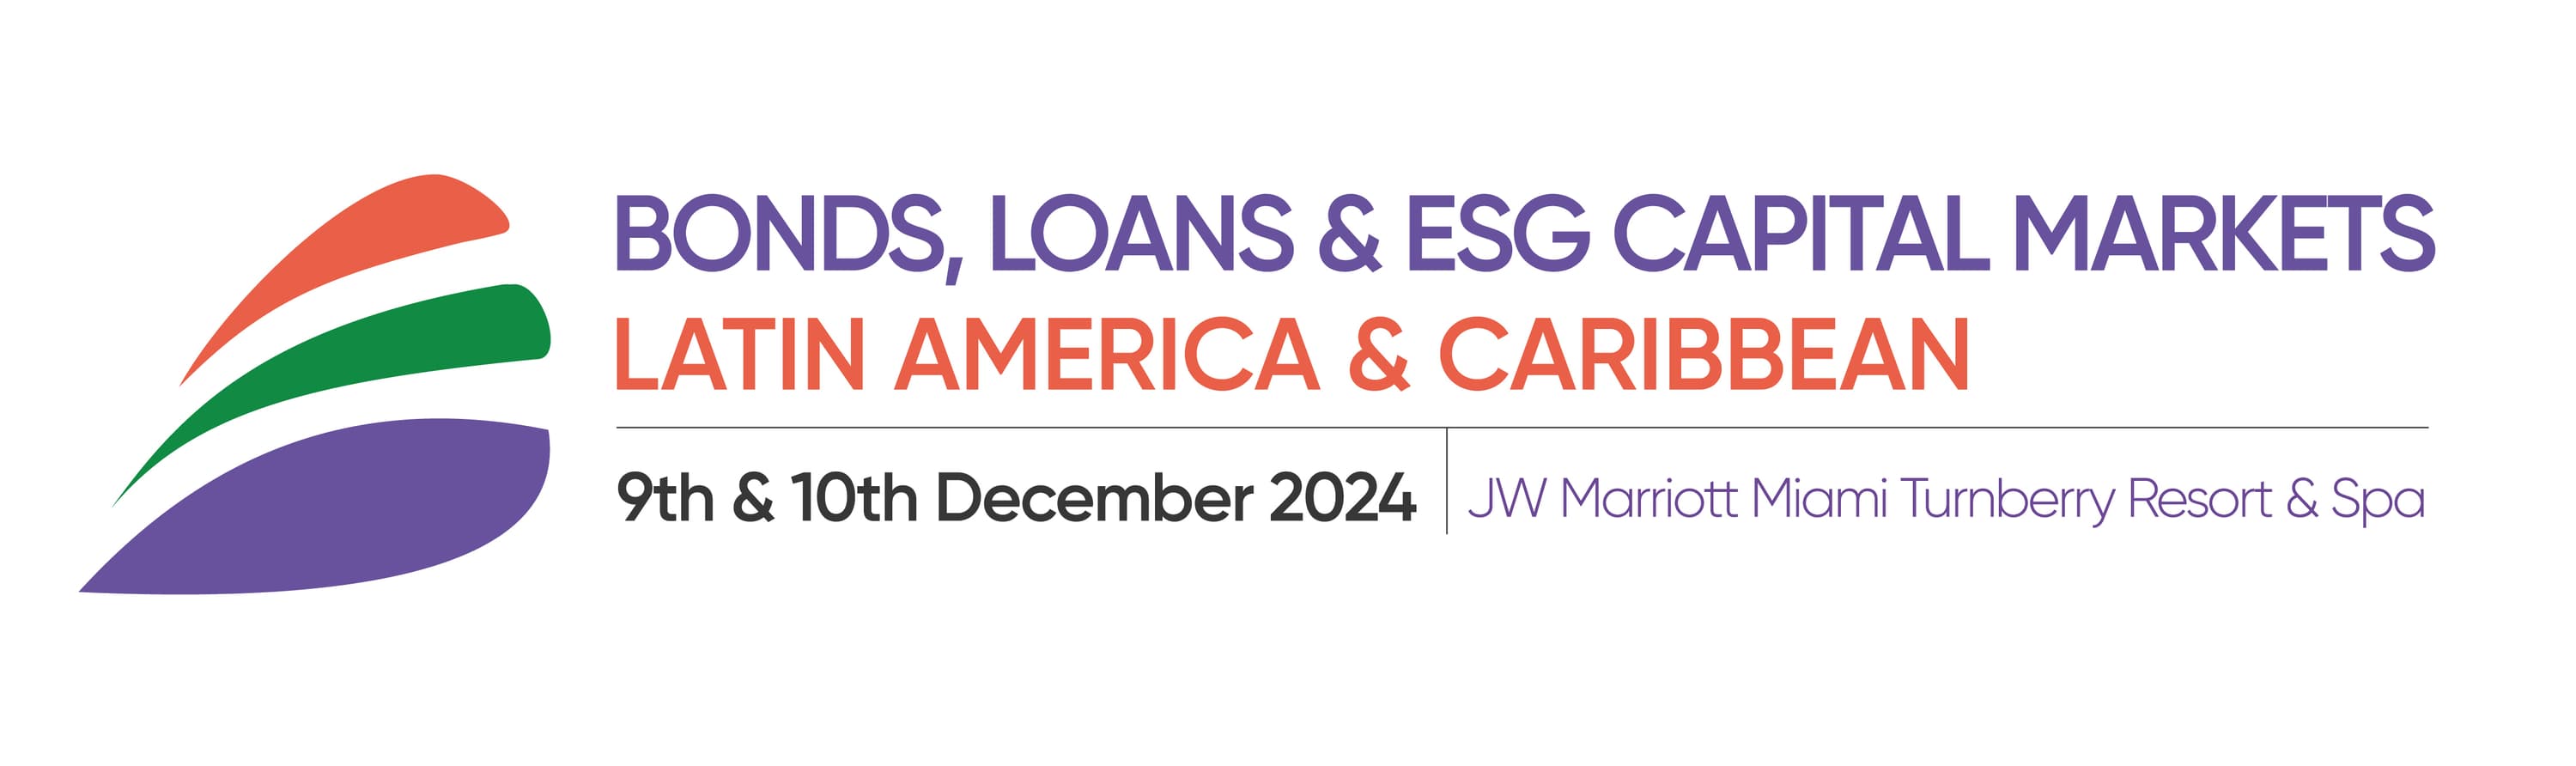 Bonds, Loans & ESG Capital Markets Latin America & Caribbean 2024